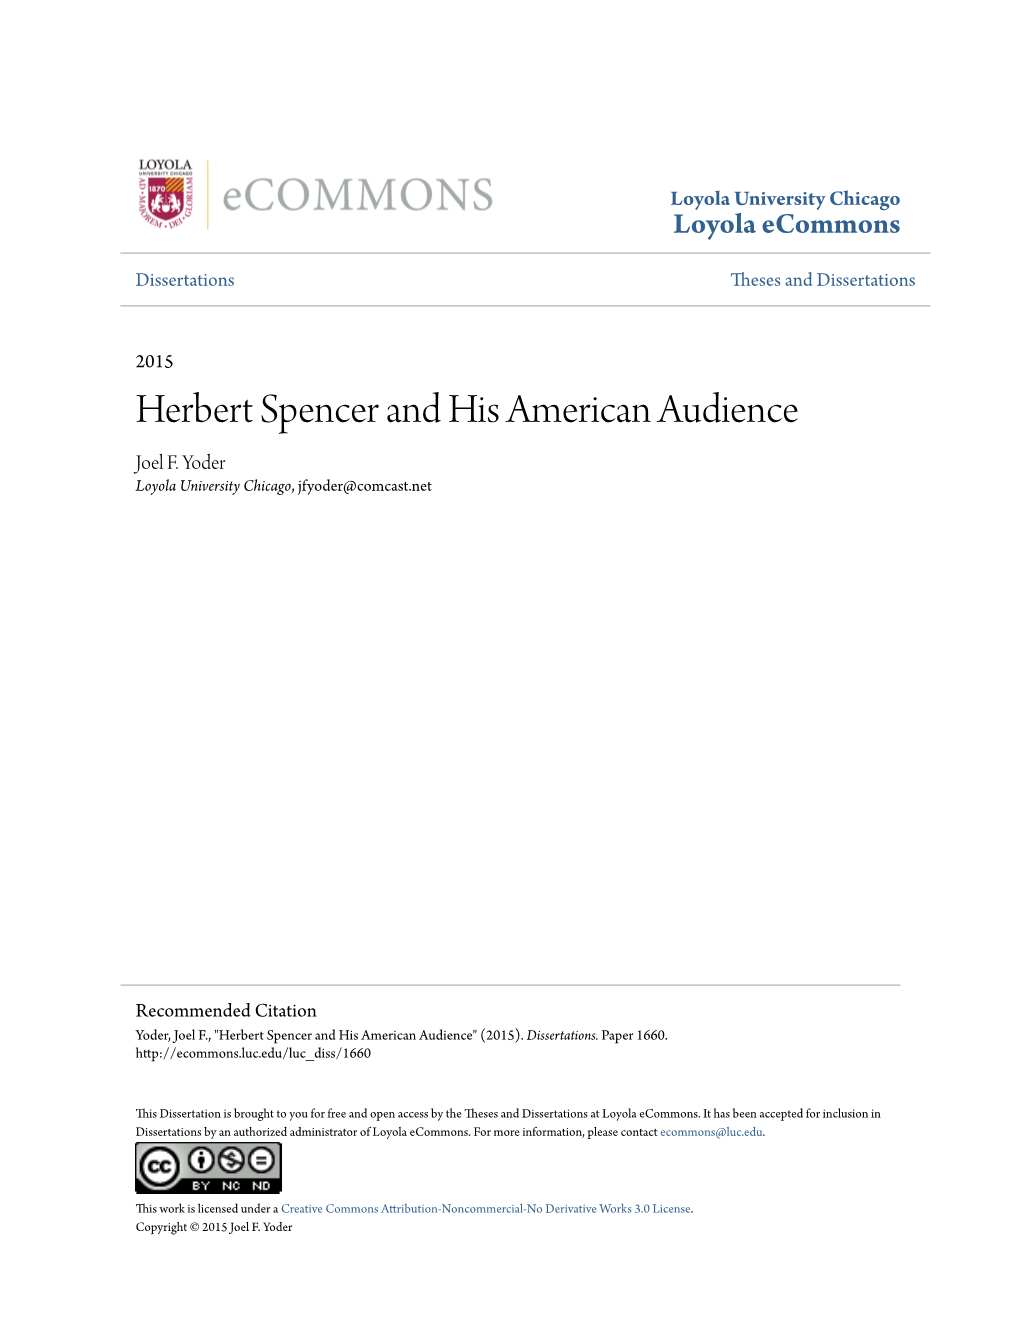 Herbert Spencer and His American Audience Joel F